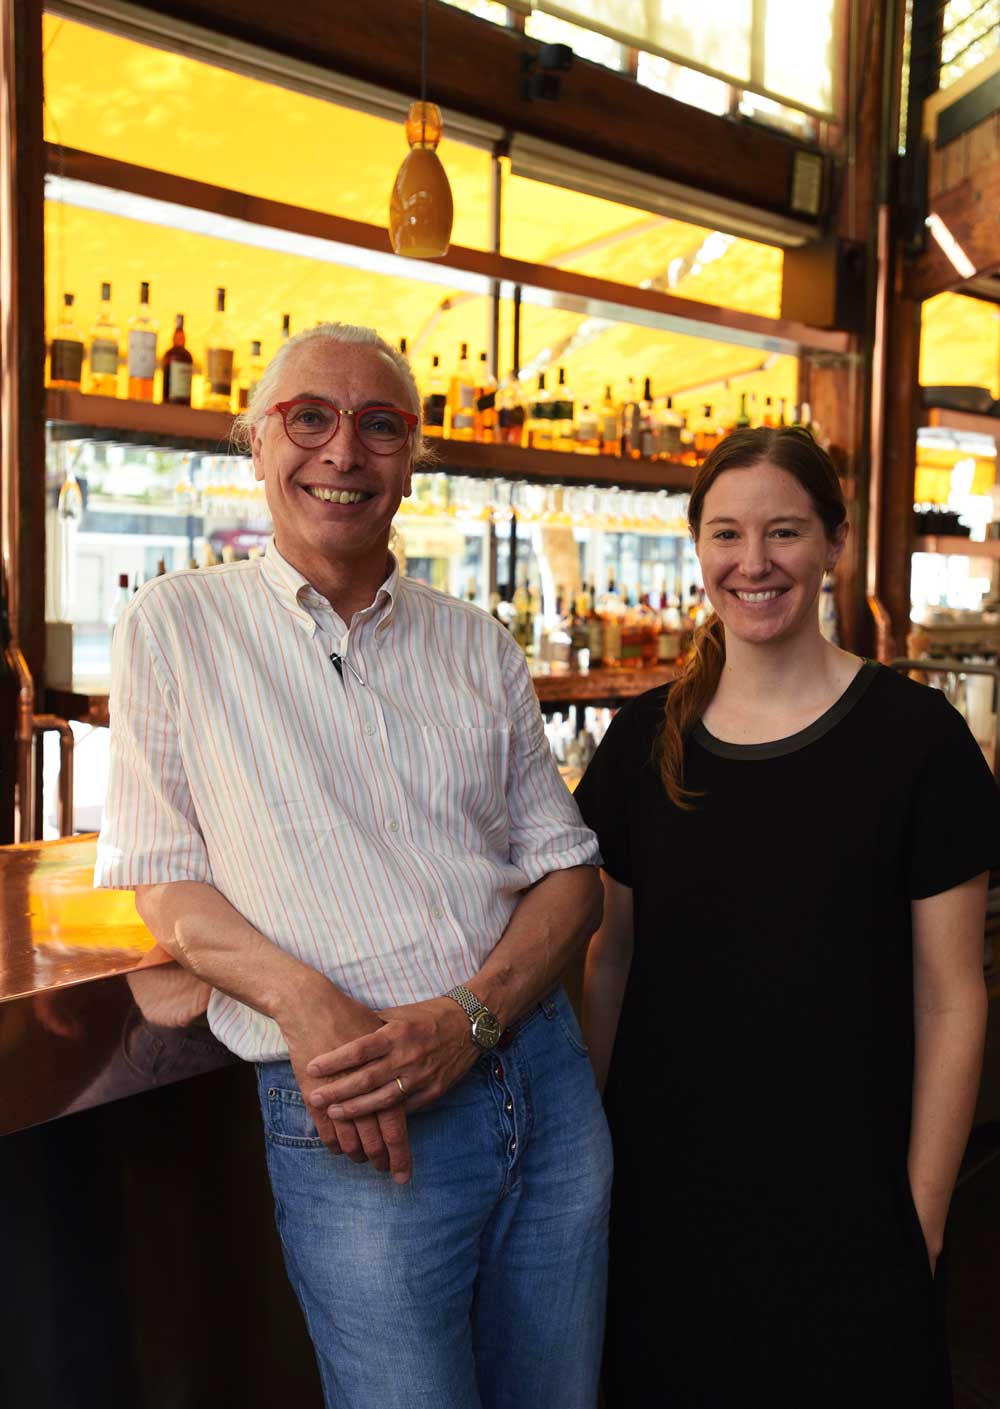 Executive Chef Gilbert Pilgram and Head Chef Rebecca Boice lean against the hammered copper bar at Zuni Café.